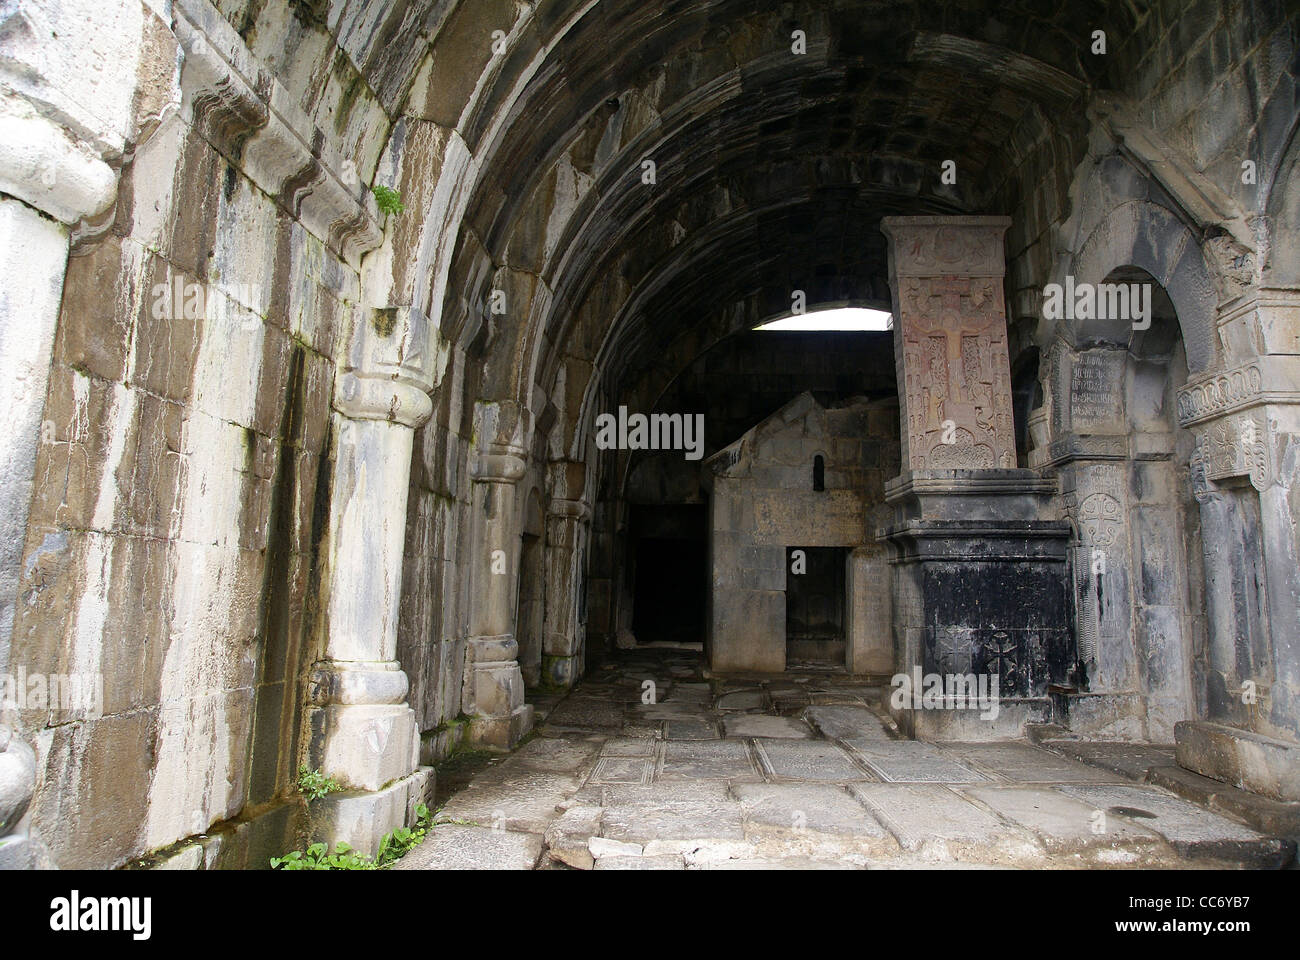 Armenia, Debed Valley, Haghbat Monastery The church of Saint Nishan. UNESCO's World Heritage site Stock Photo